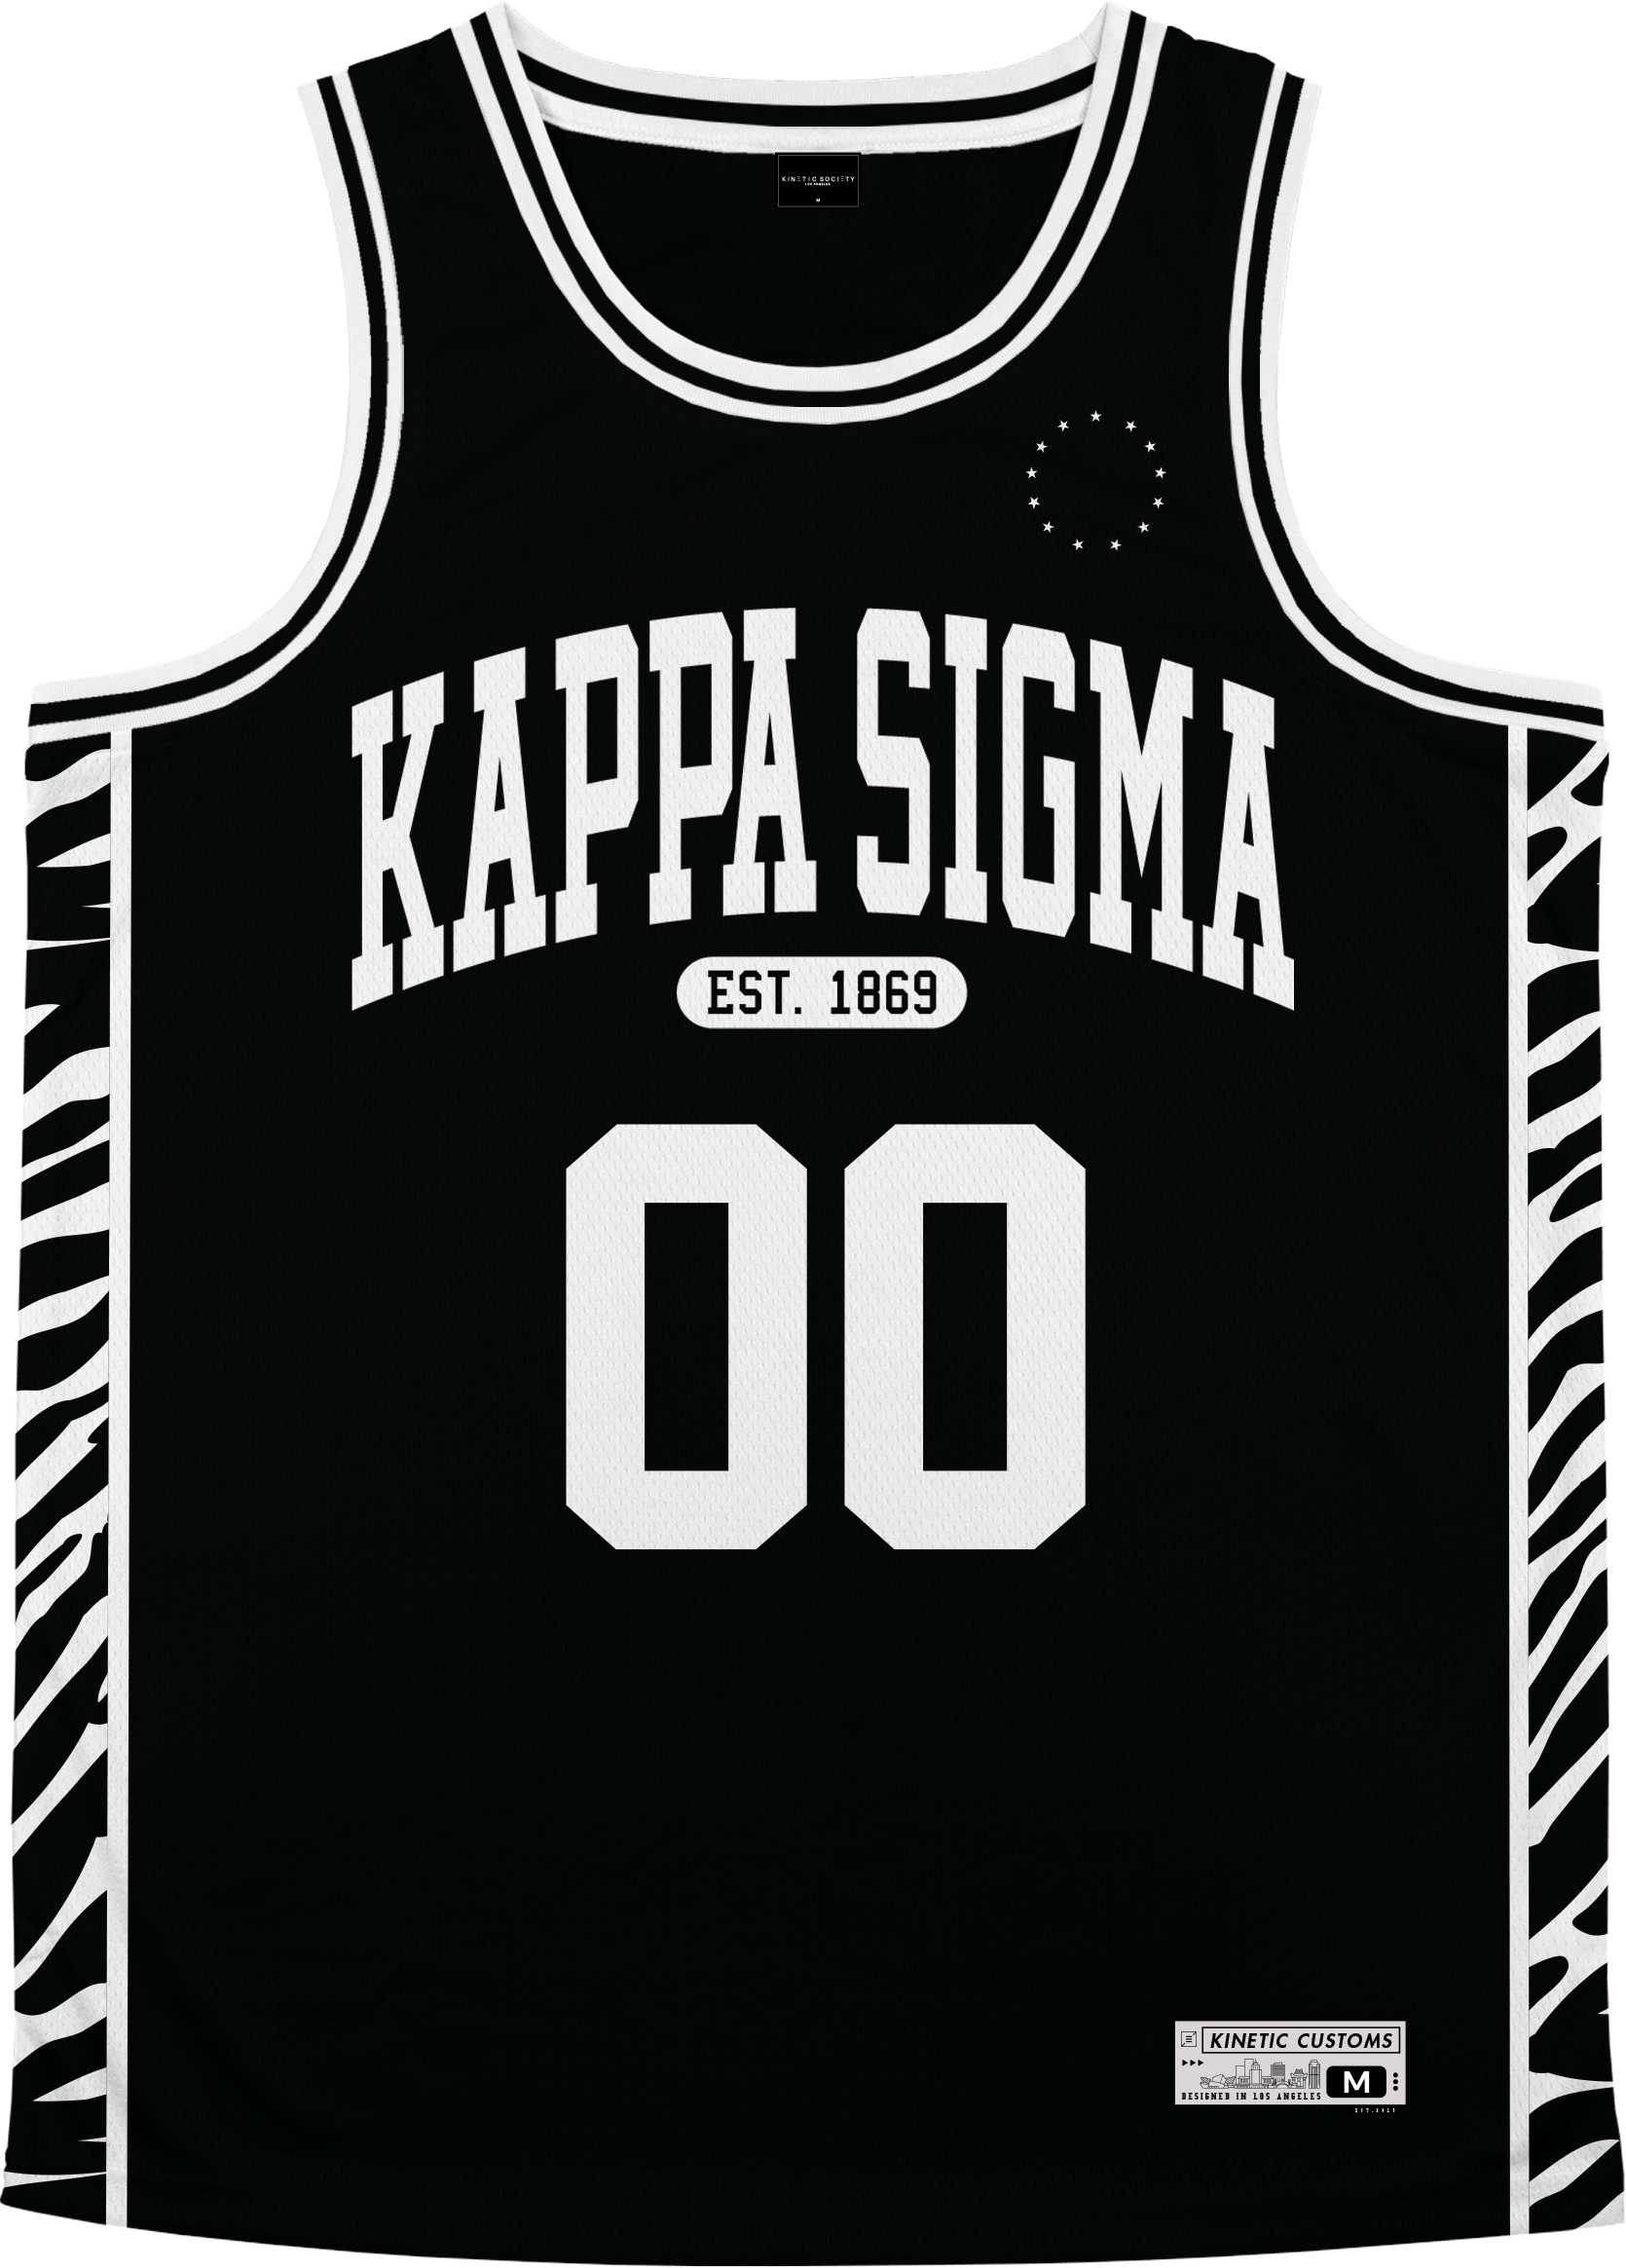 Kappa Sigma - Zebra Flex Basketball Jersey Premium Basketball Kinetic Society LLC 